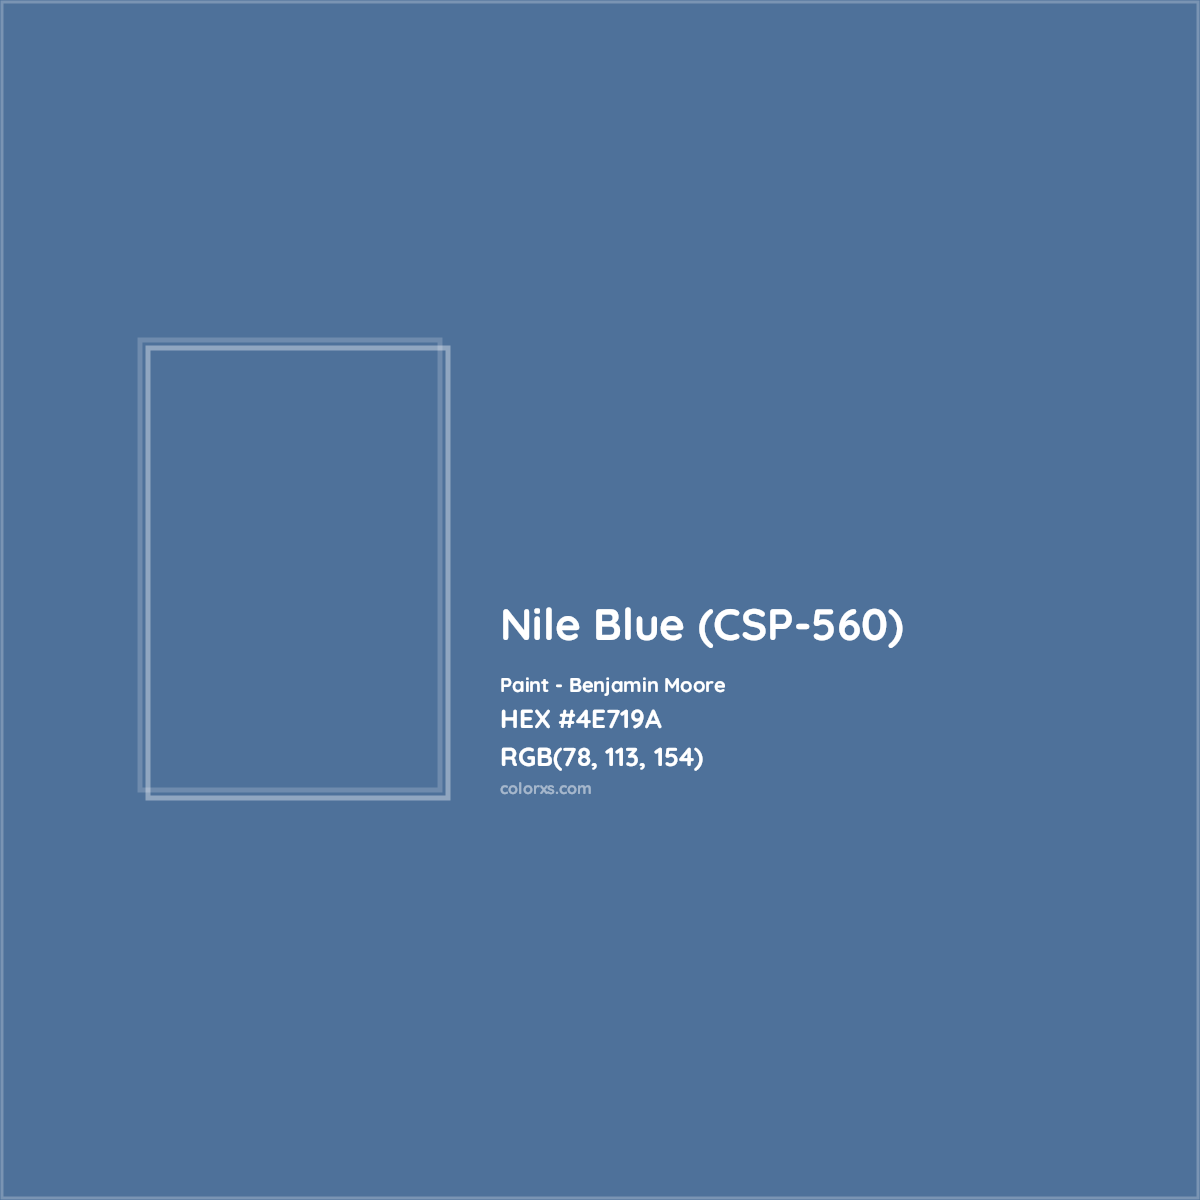 HEX #4E719A Nile Blue (CSP-560) Paint Benjamin Moore - Color Code